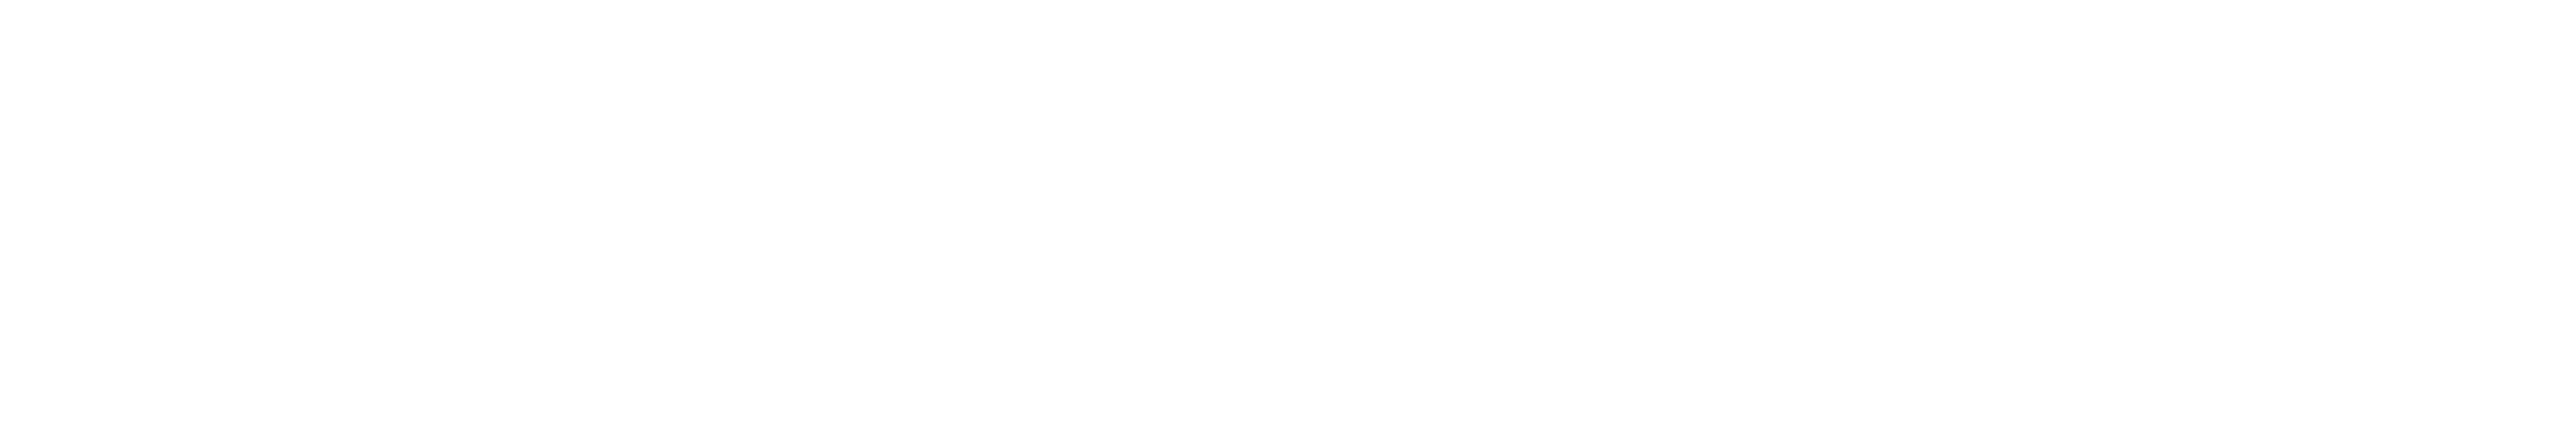 CEH Health and Social care logo